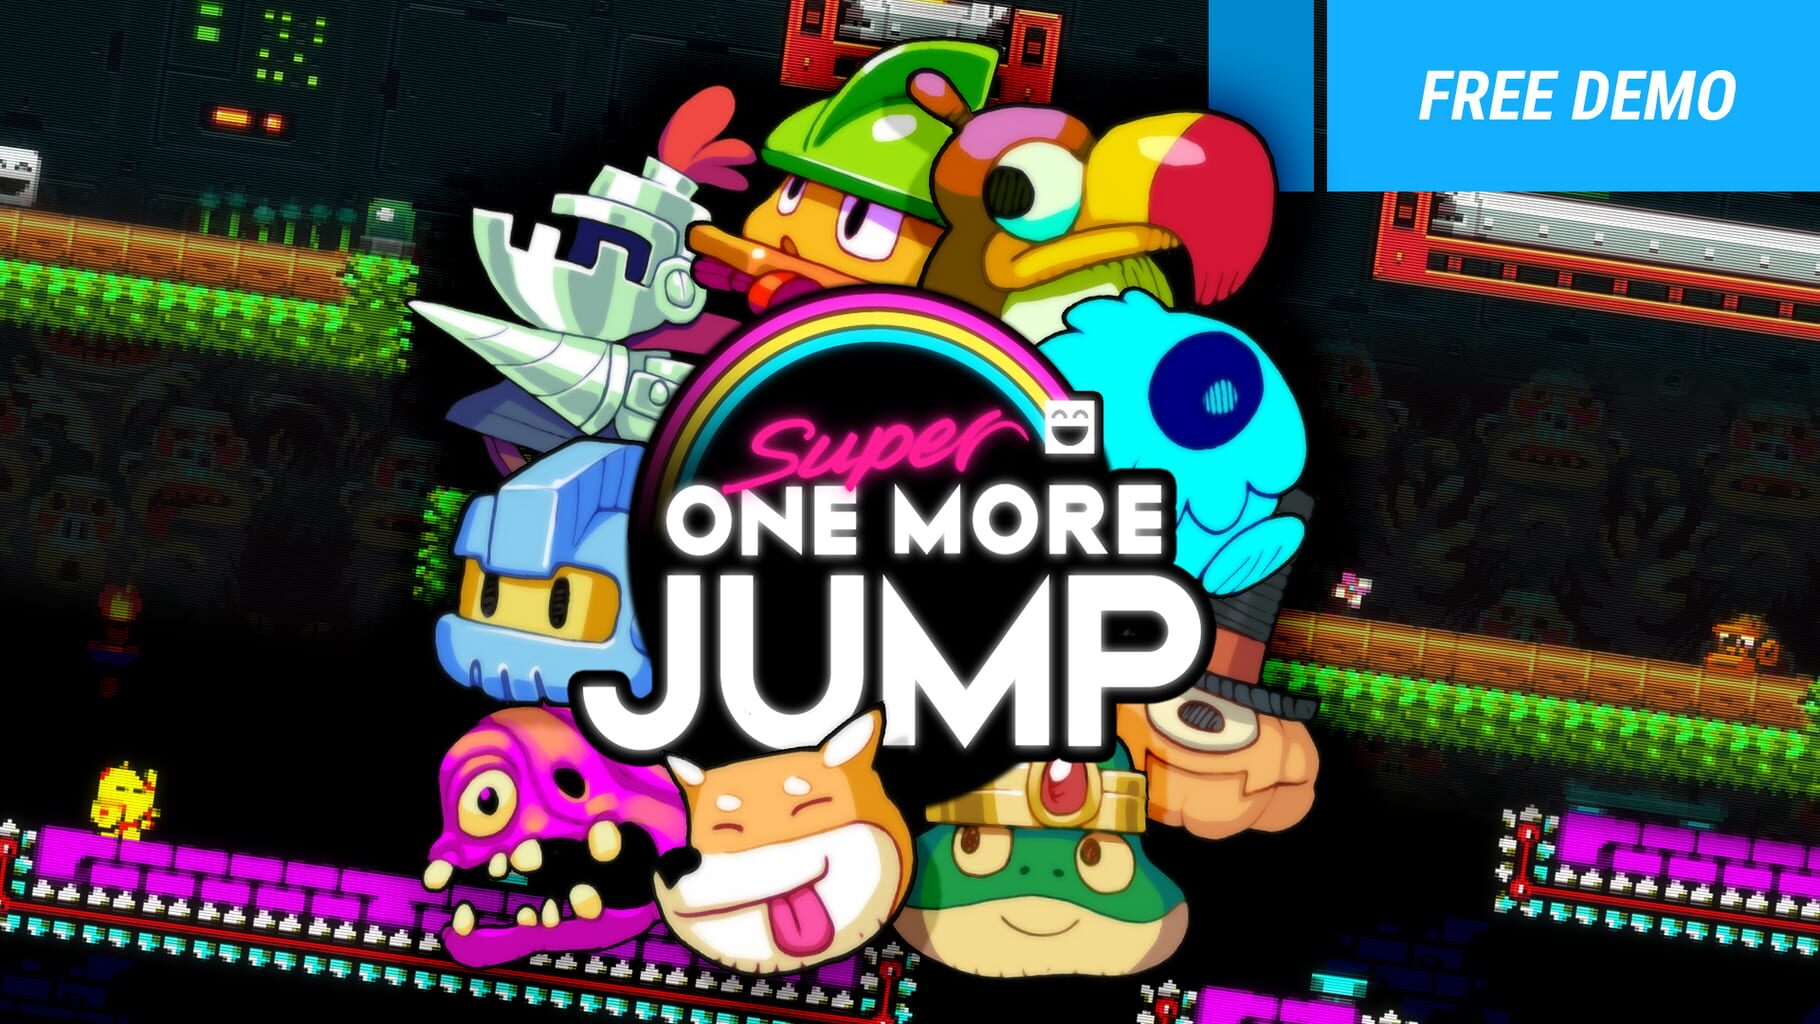 Super One More Jump artwork